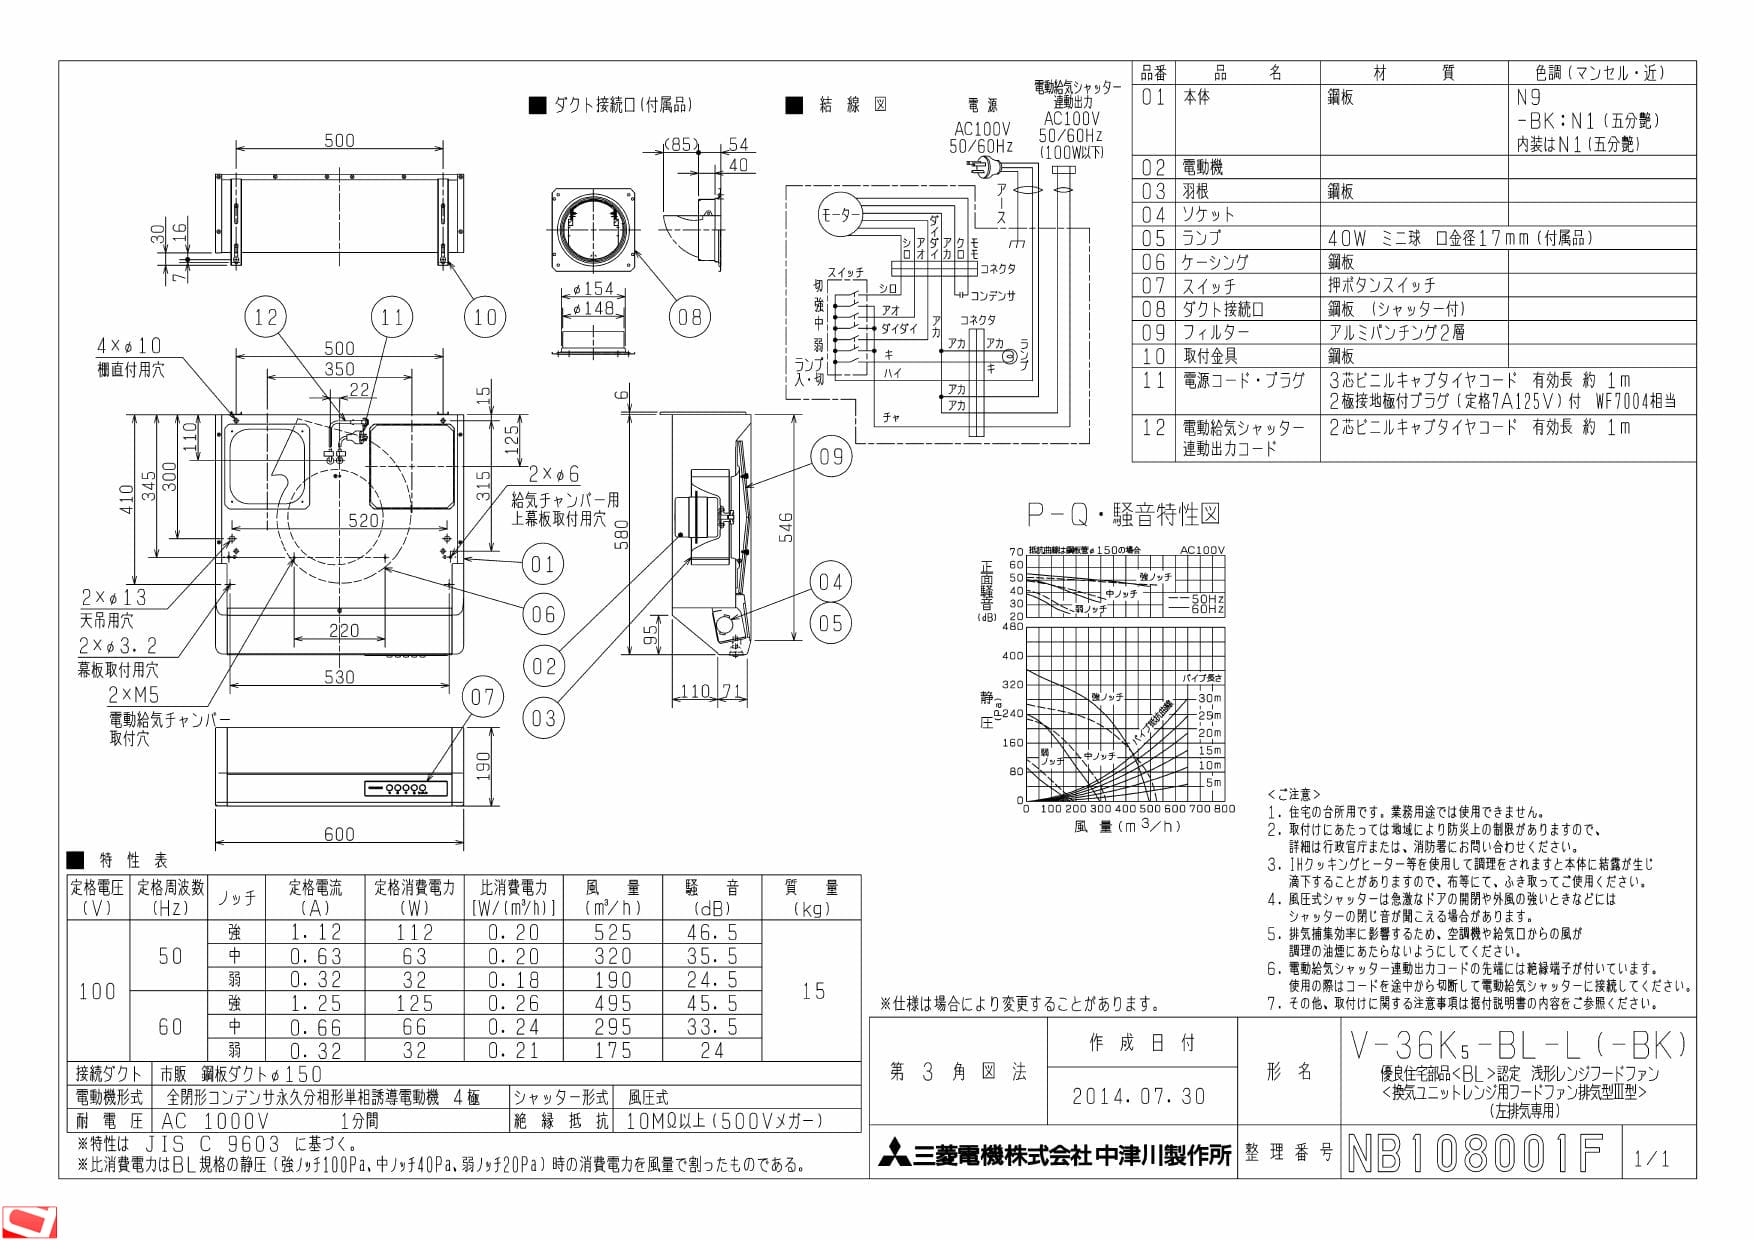 MITSUBISHI V-36K6-BL-L レンジフードファン (浅形・高静圧・丸排気タイプ) - 3